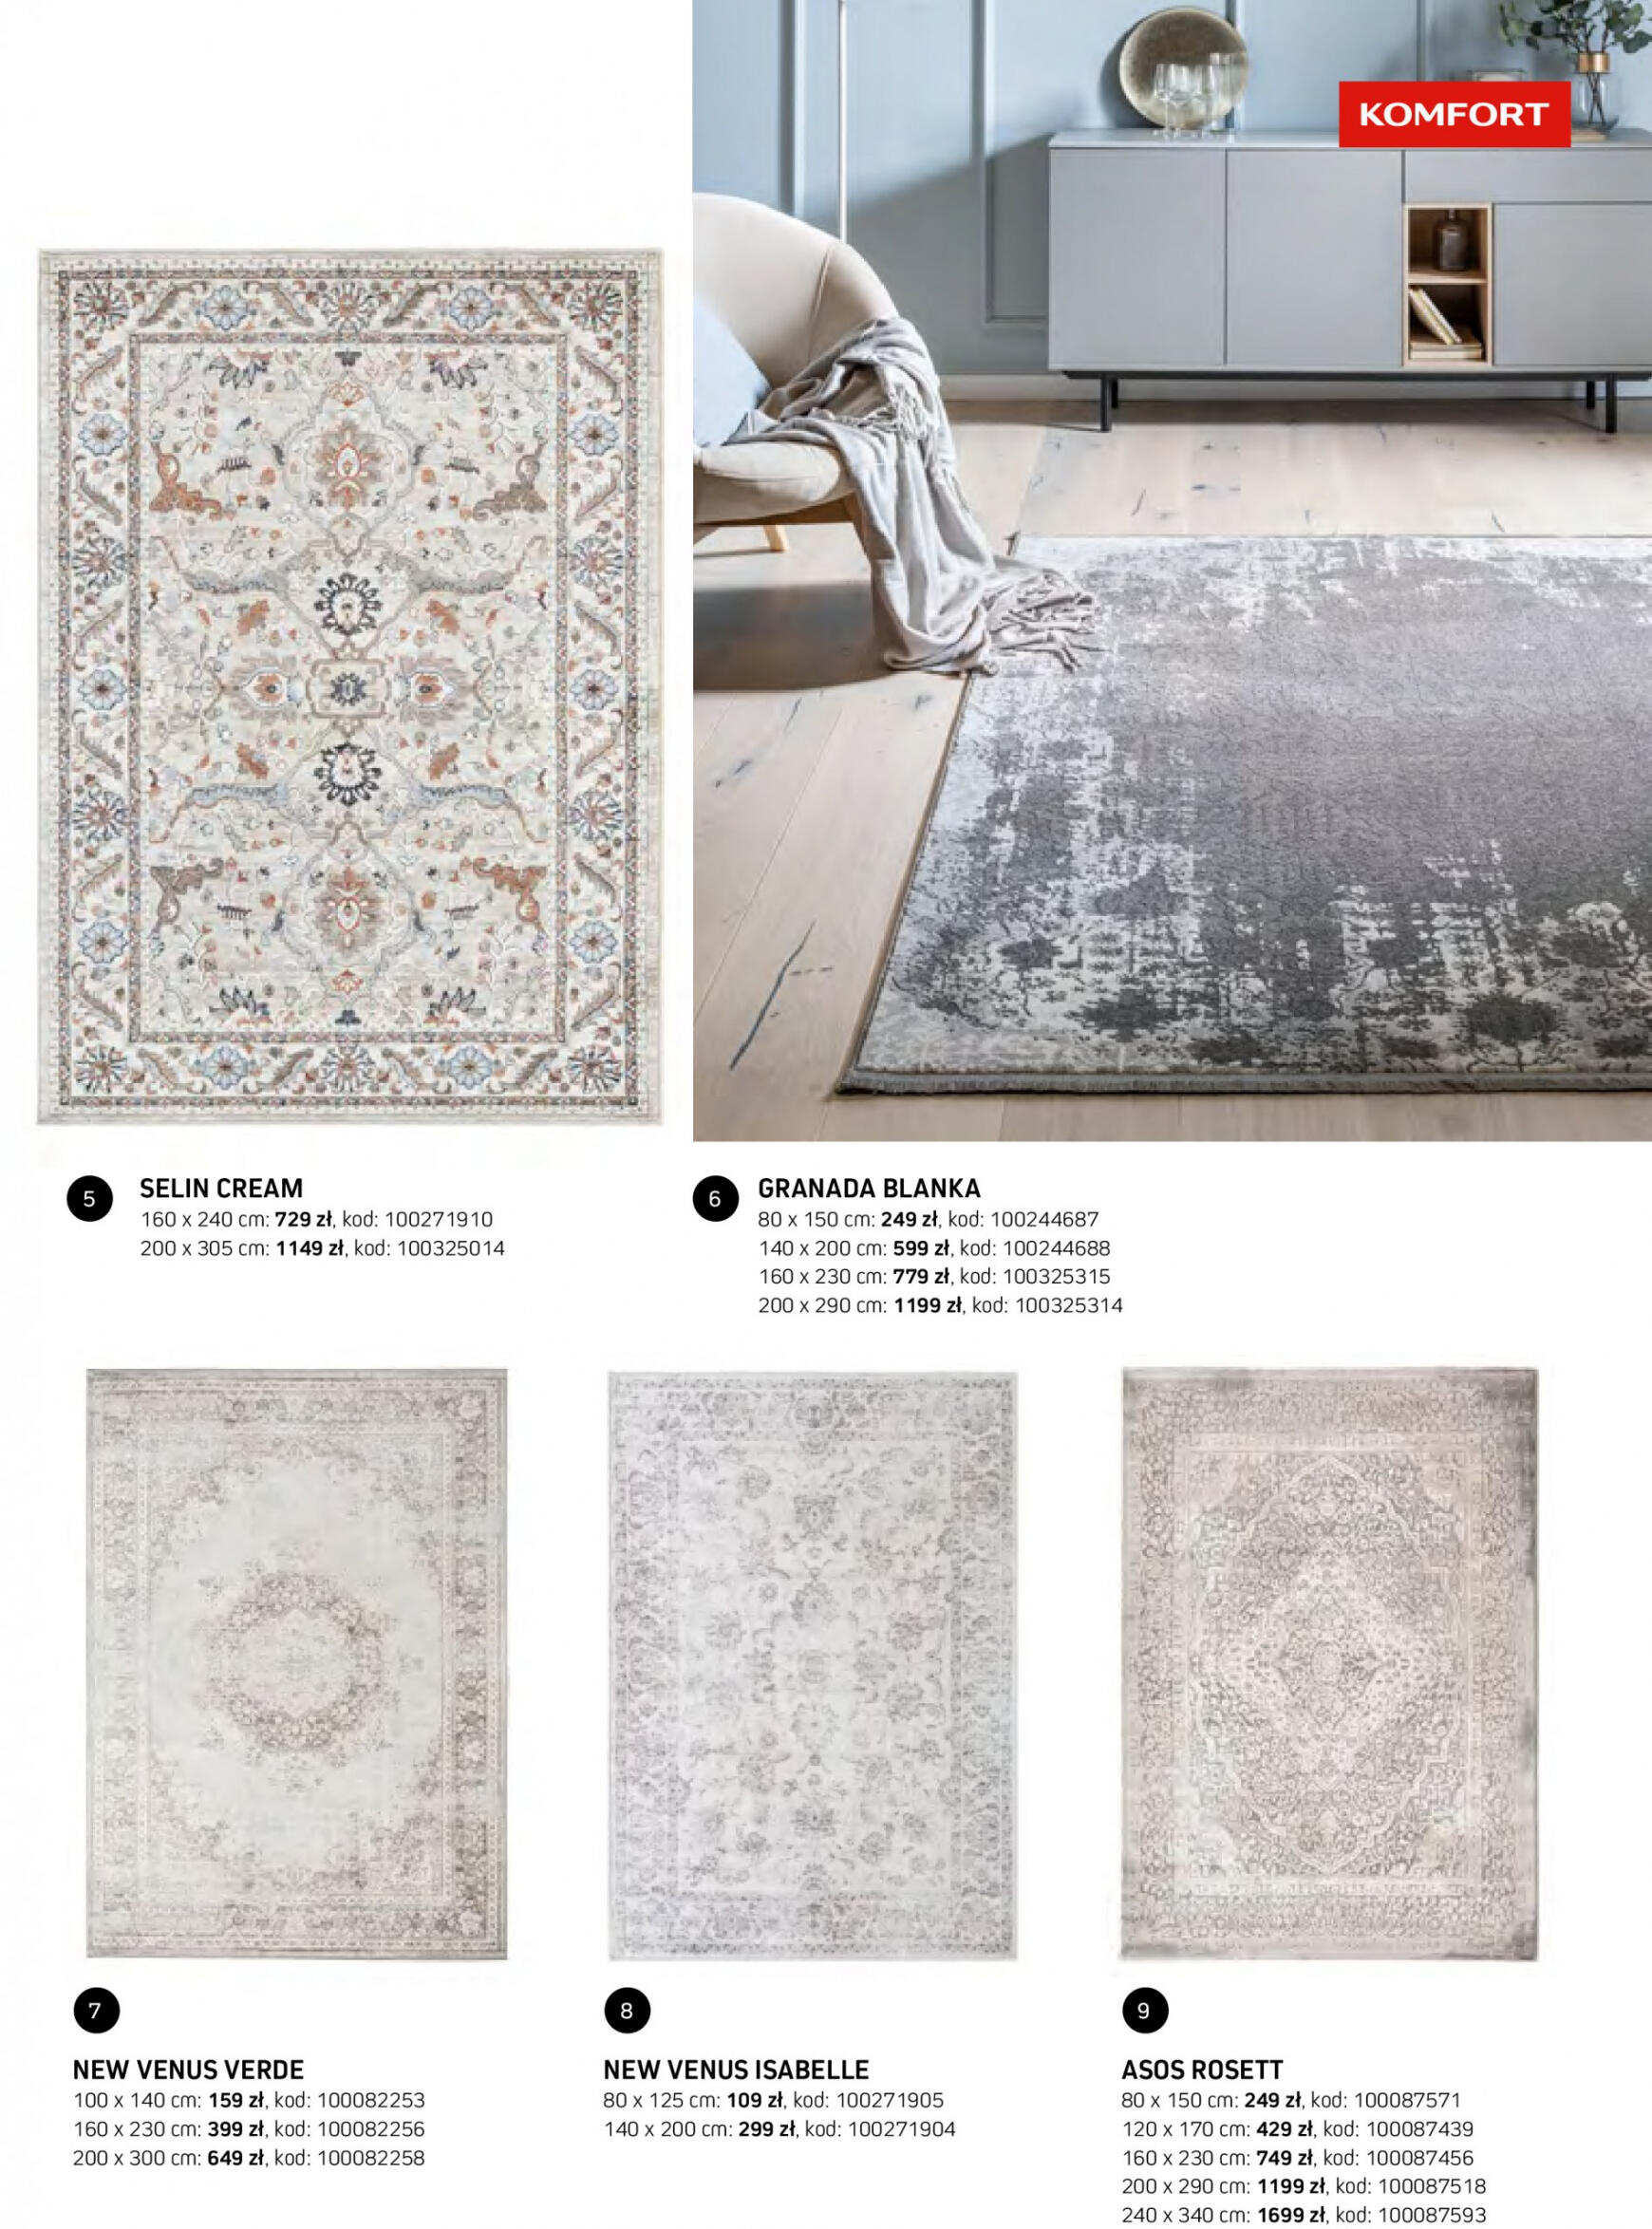 komfort - Komfort - Katalog dywany - page: 35